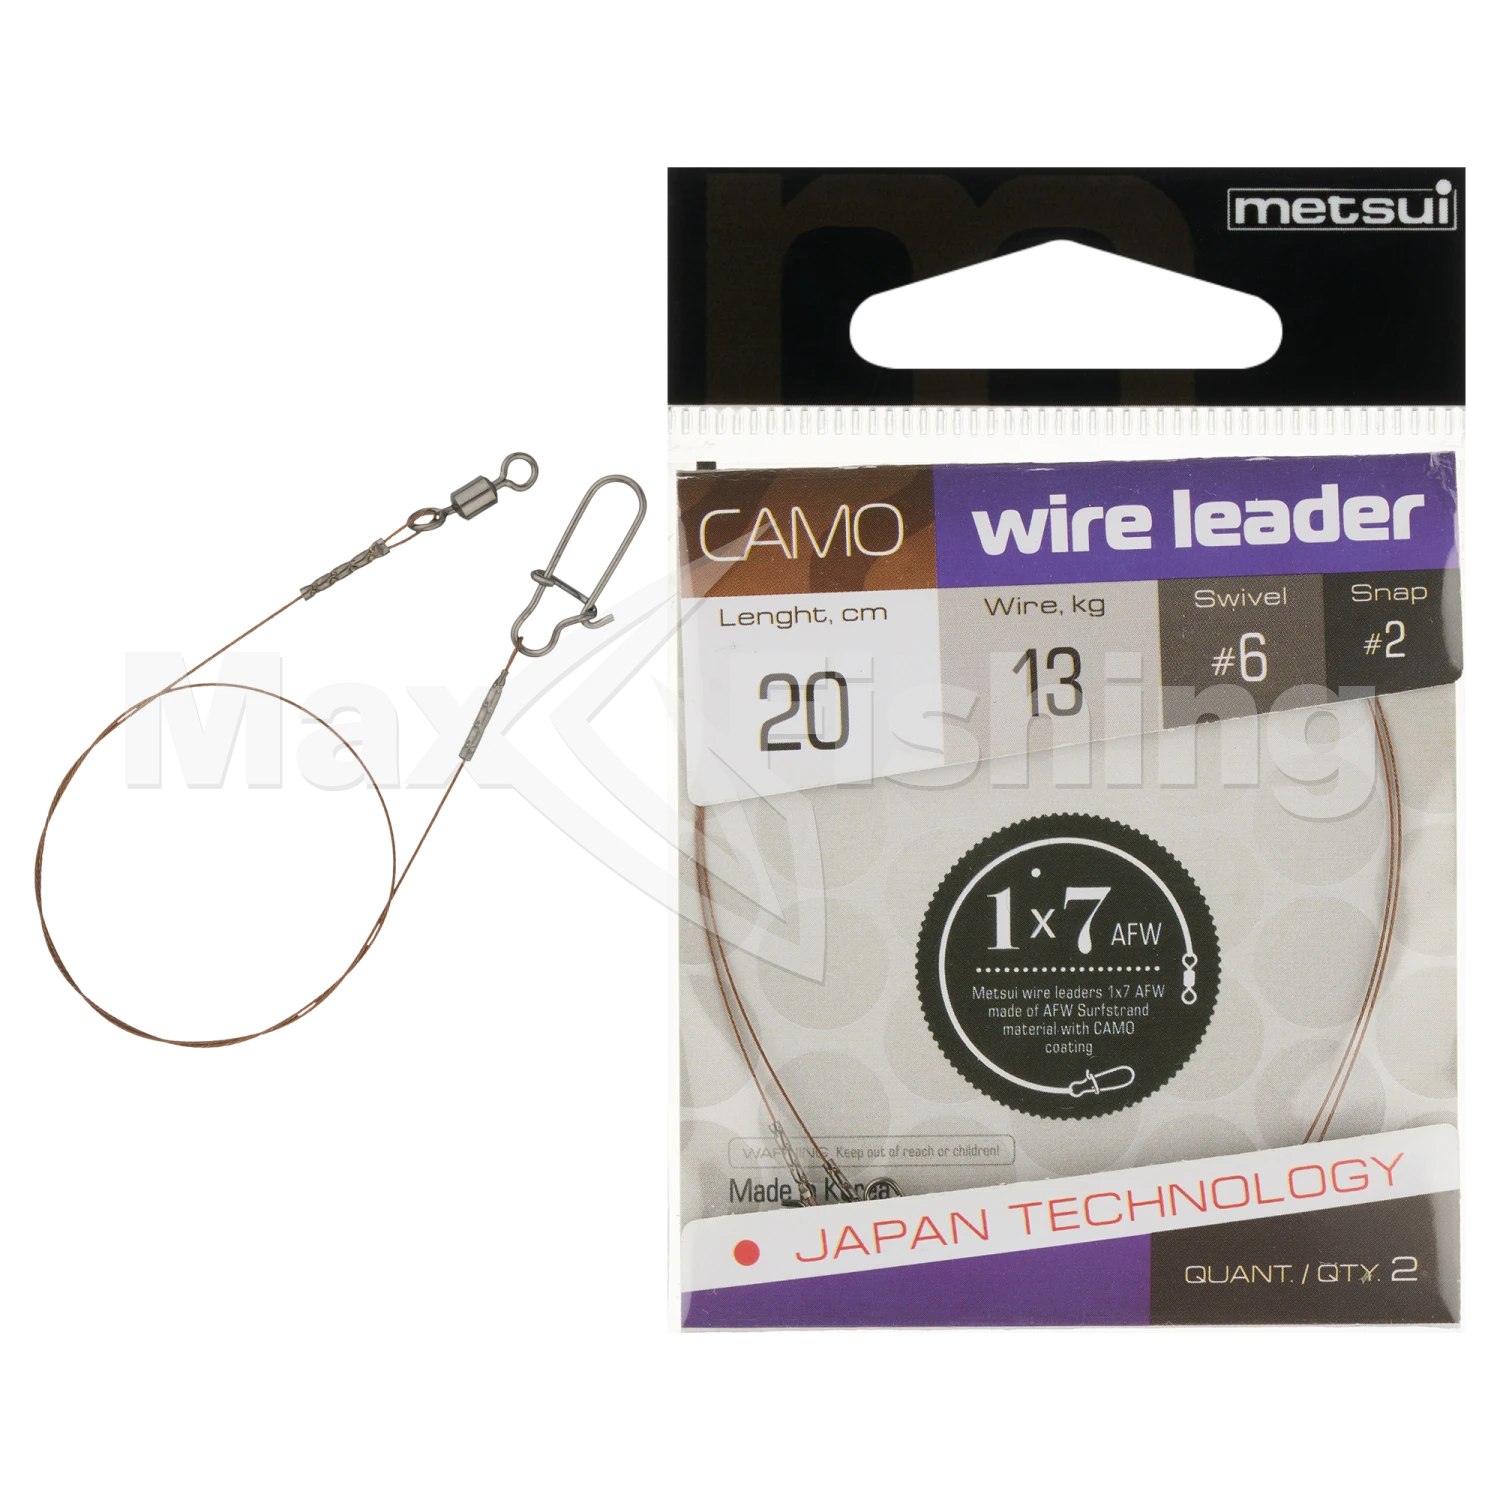 Поводок Metsui Camo Wire Leader AFW 1x7 13кг 20см